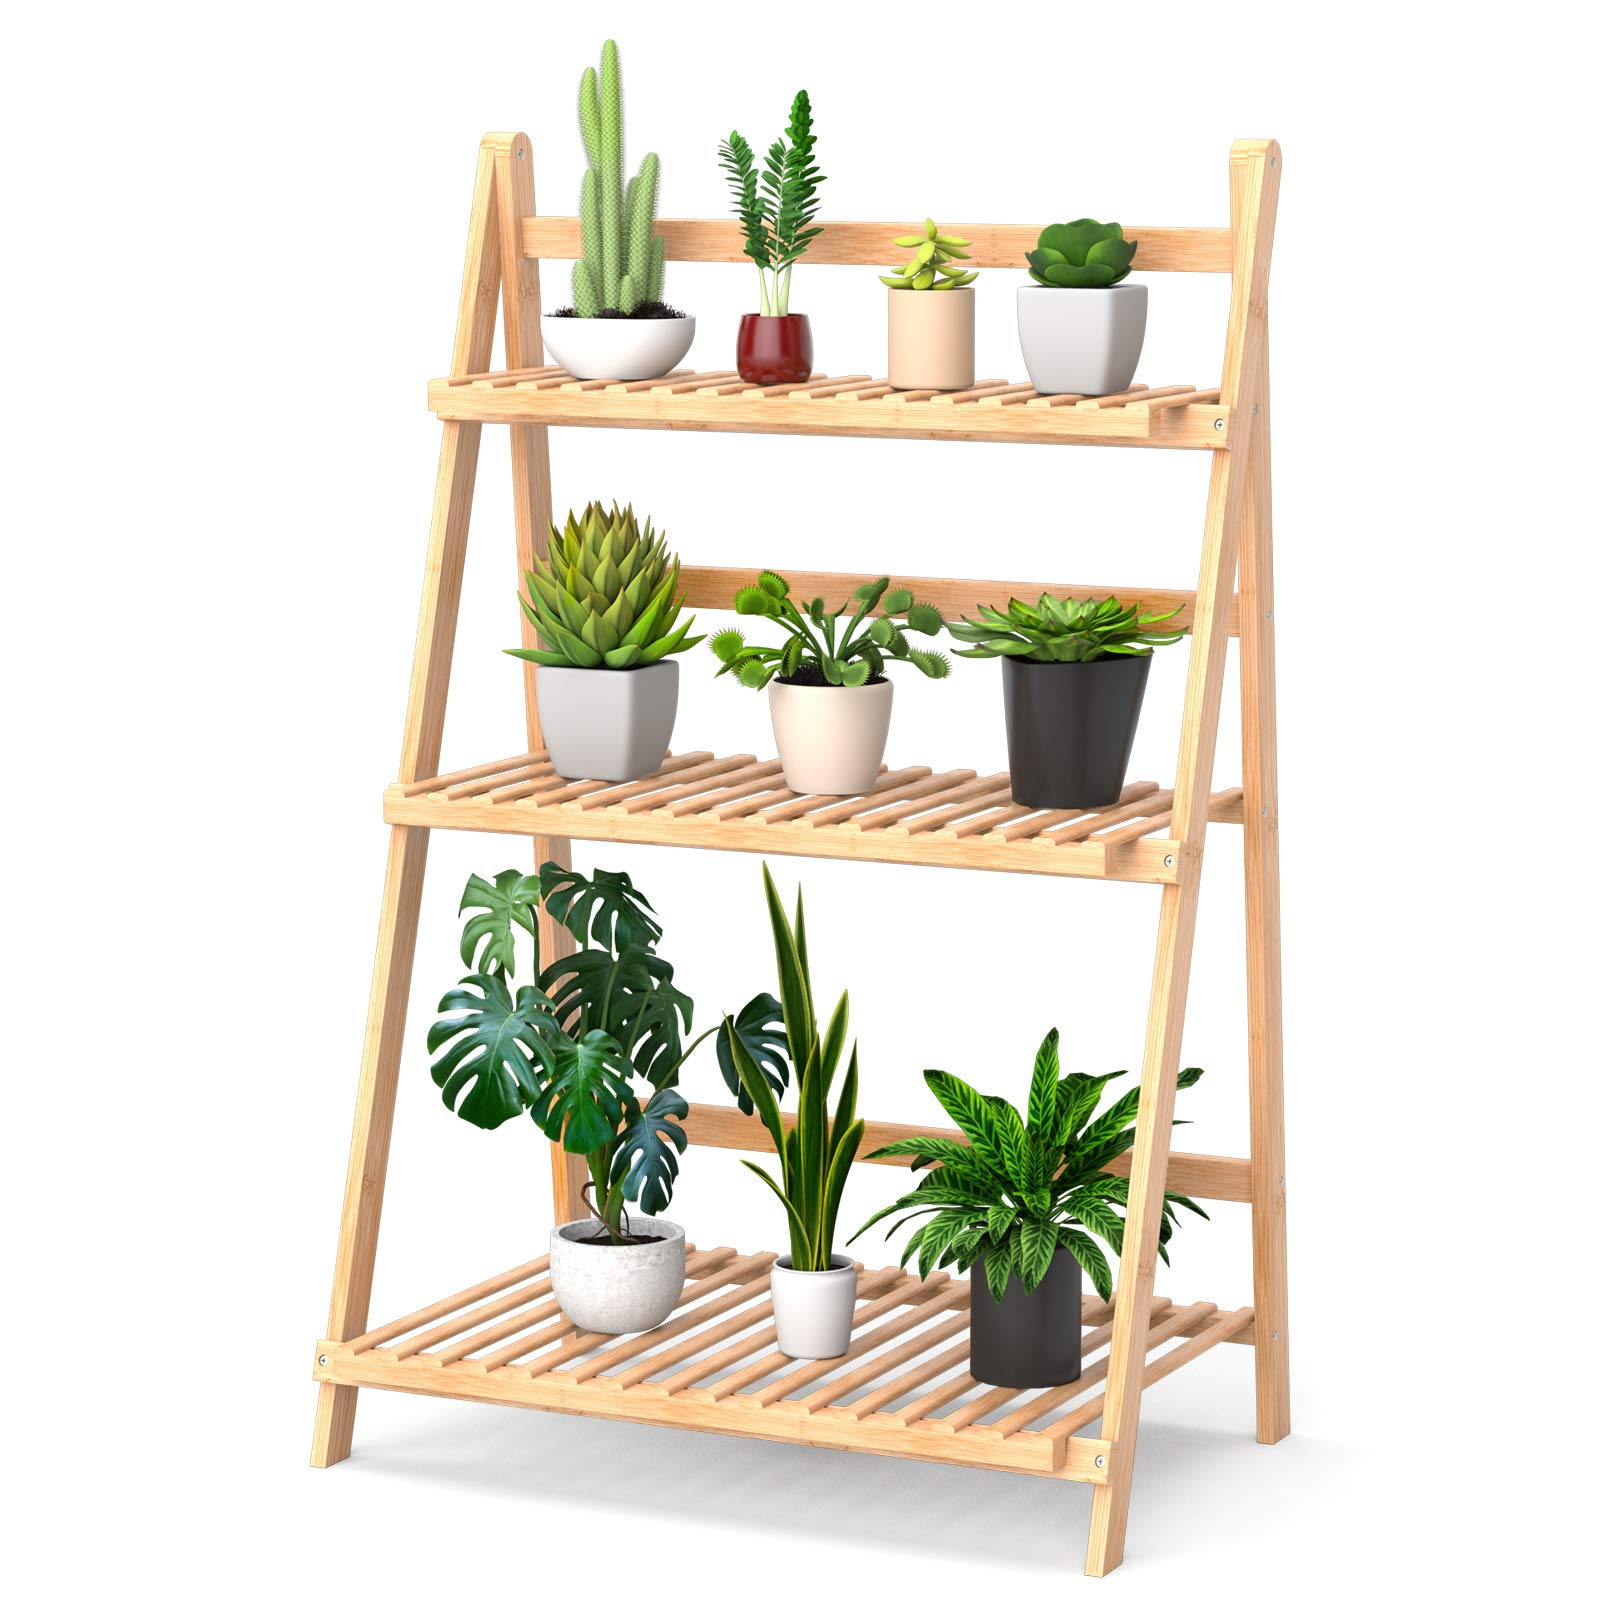 Giantex Folding Bamboo Plant Stand, 3-Tier Flower Pot Rack Display Shelf